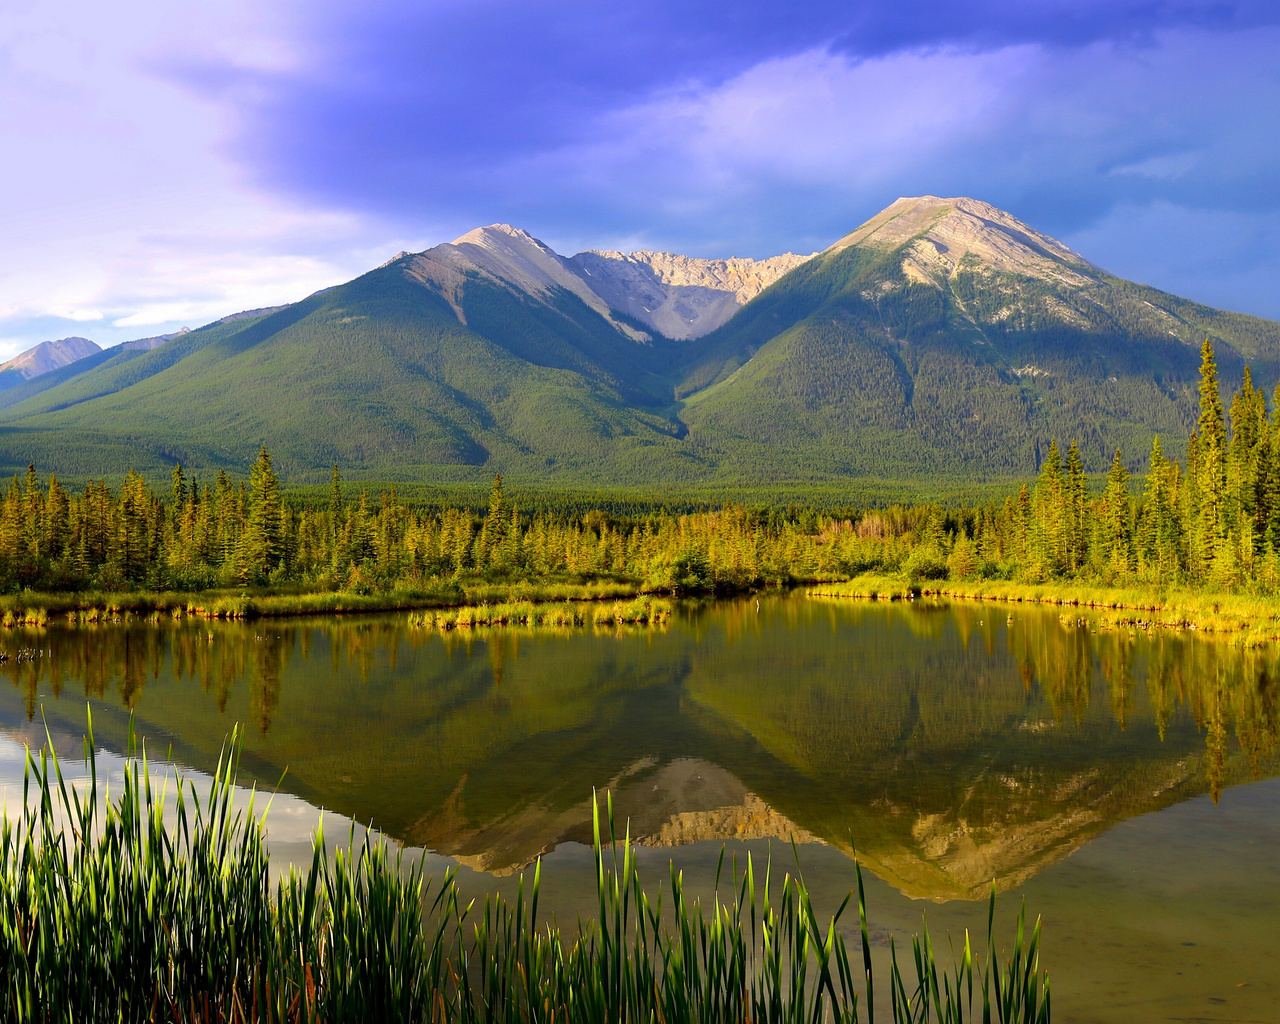 , , , ,  ,  ,   , canadian rocky mountains,  , lake vermilion, lake, mountains, reflection, canada, rocky mountains, alberta, banff national park